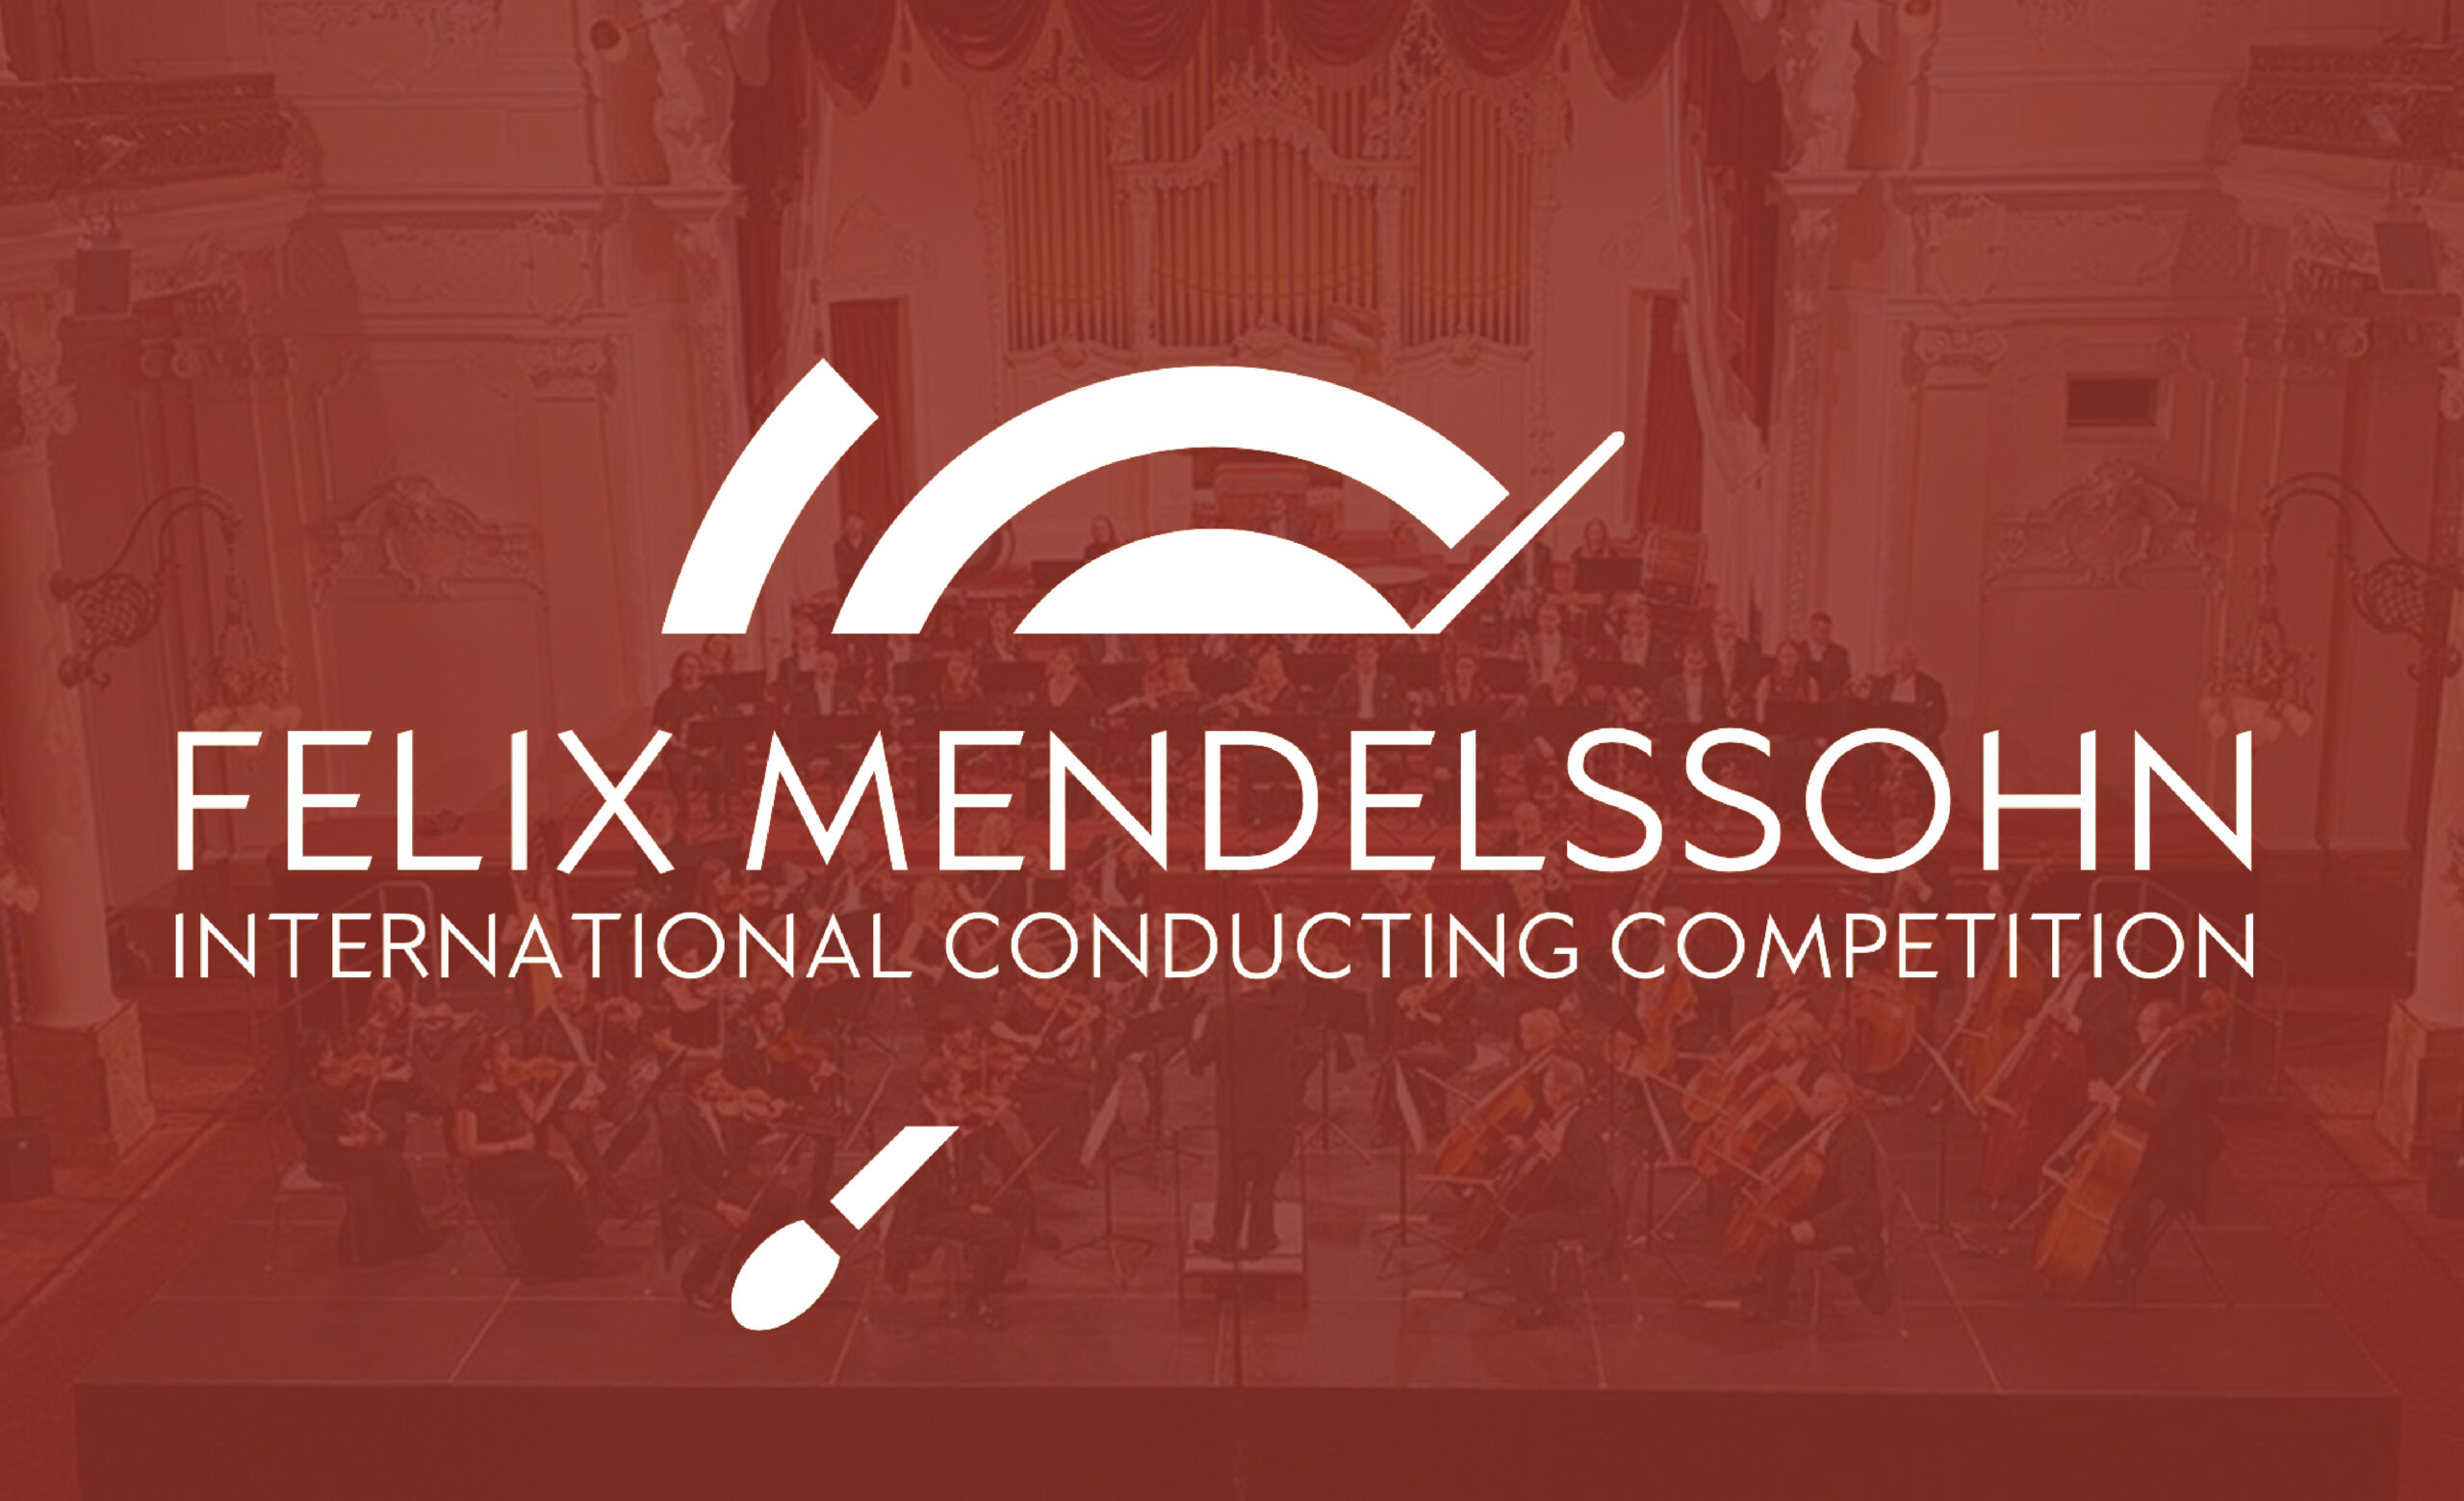 Mendelssohn international conducting competition